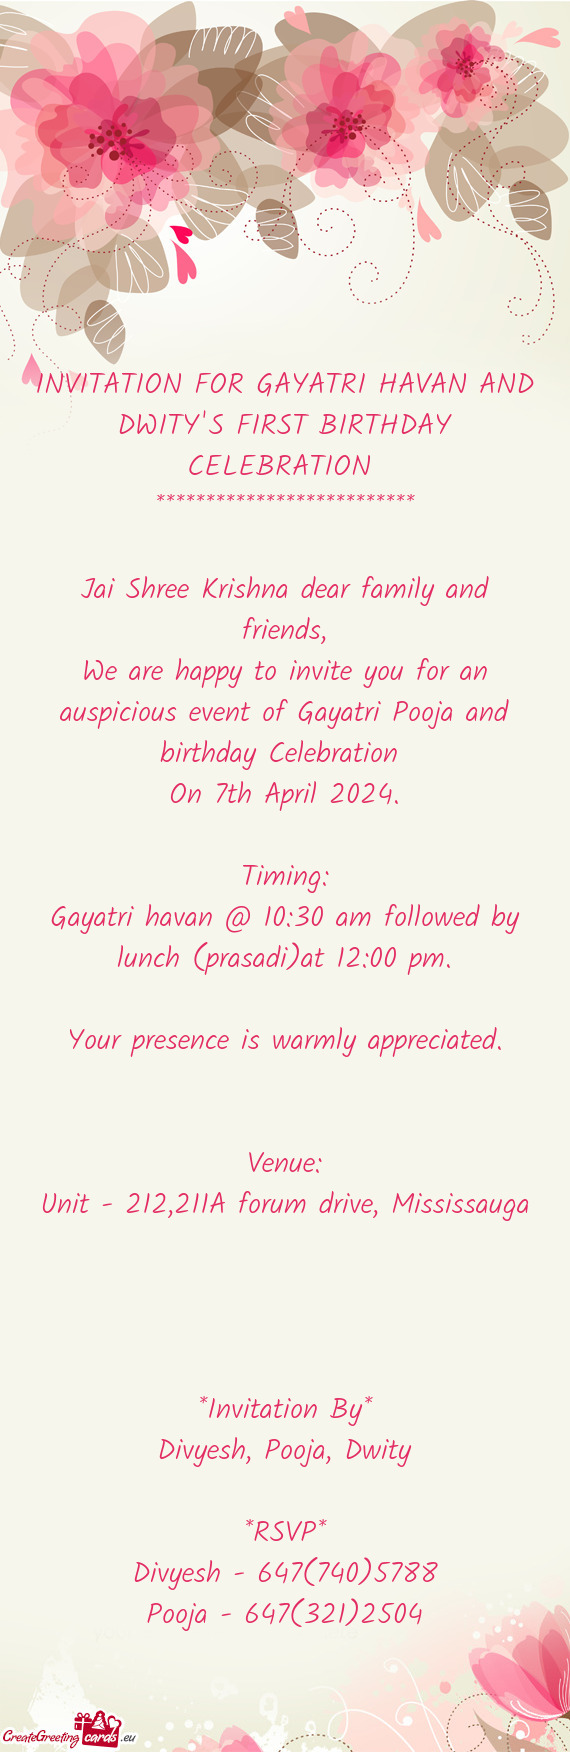 INVITATION FOR GAYATRI HAVAN AND DWITY